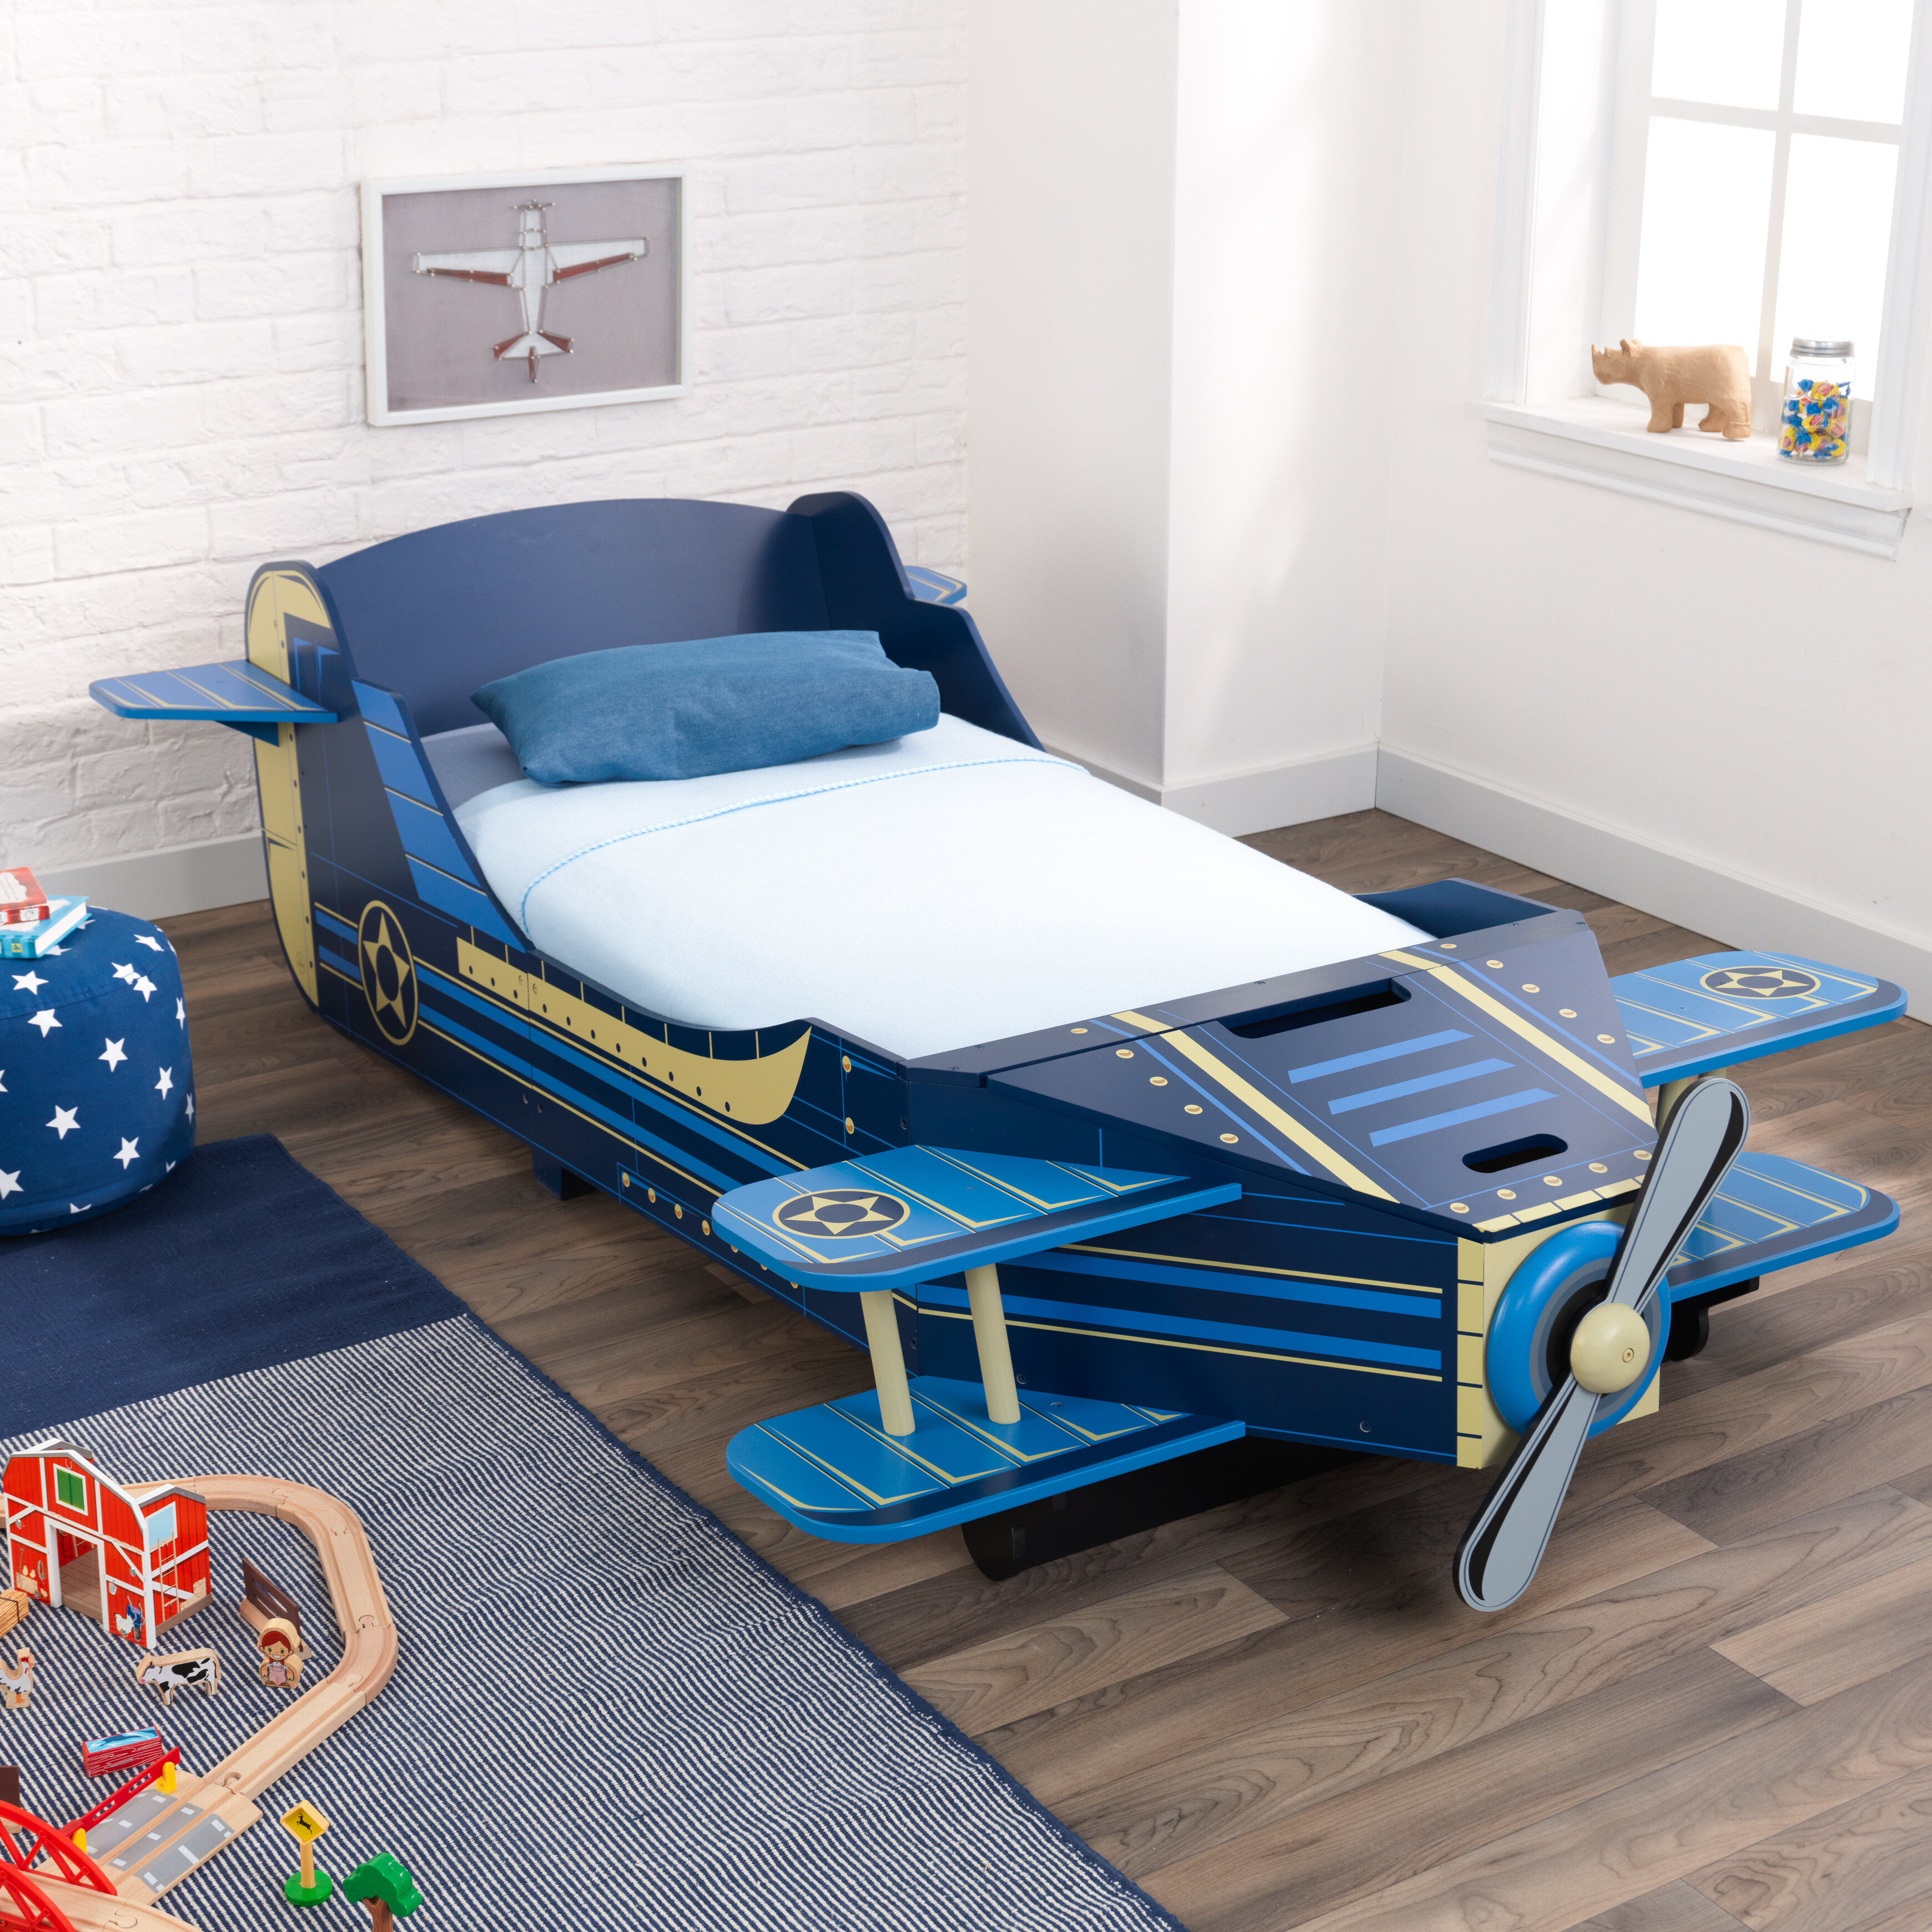 Kidkraft Airplane Toddler Car Bed With Storage Reviews Wayfair